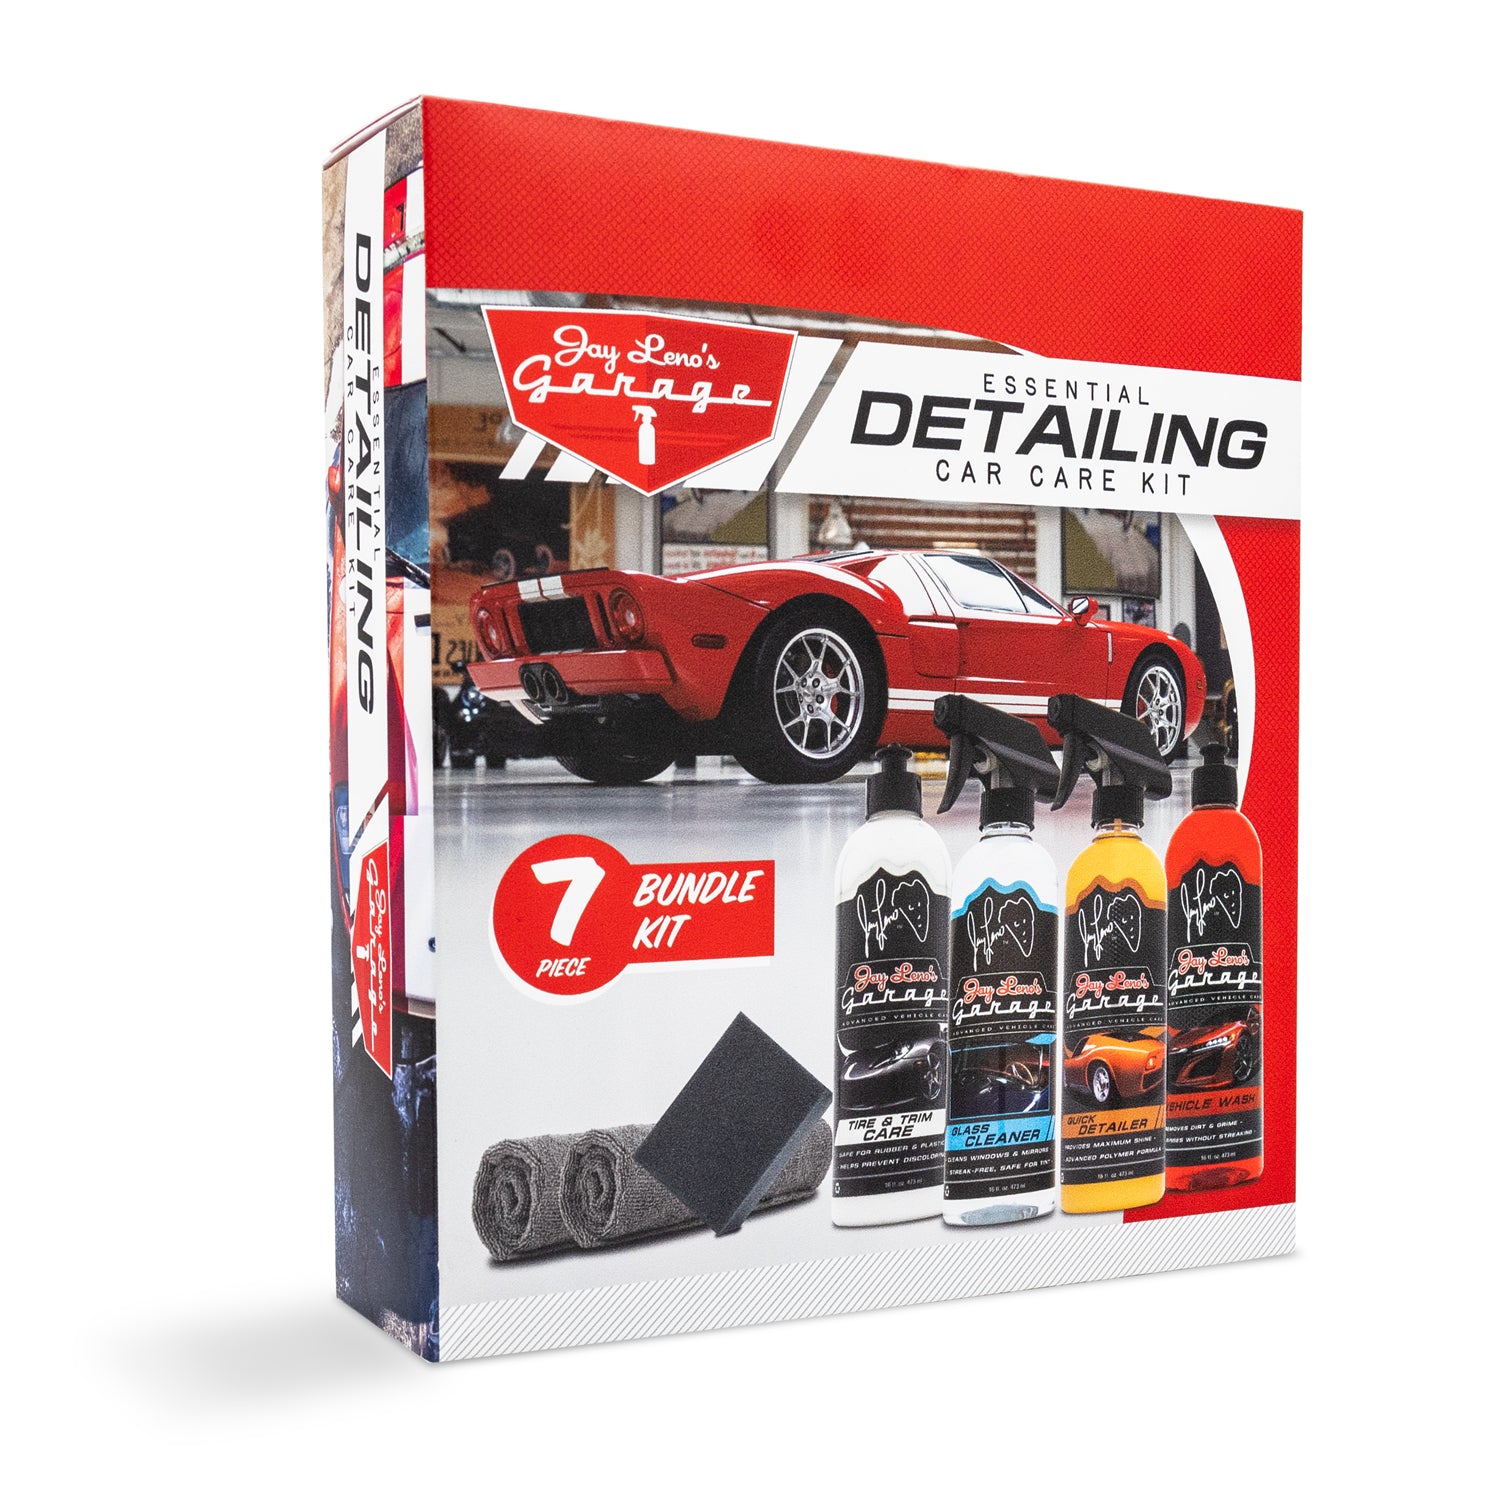 Essential Detailing Car Care Kit